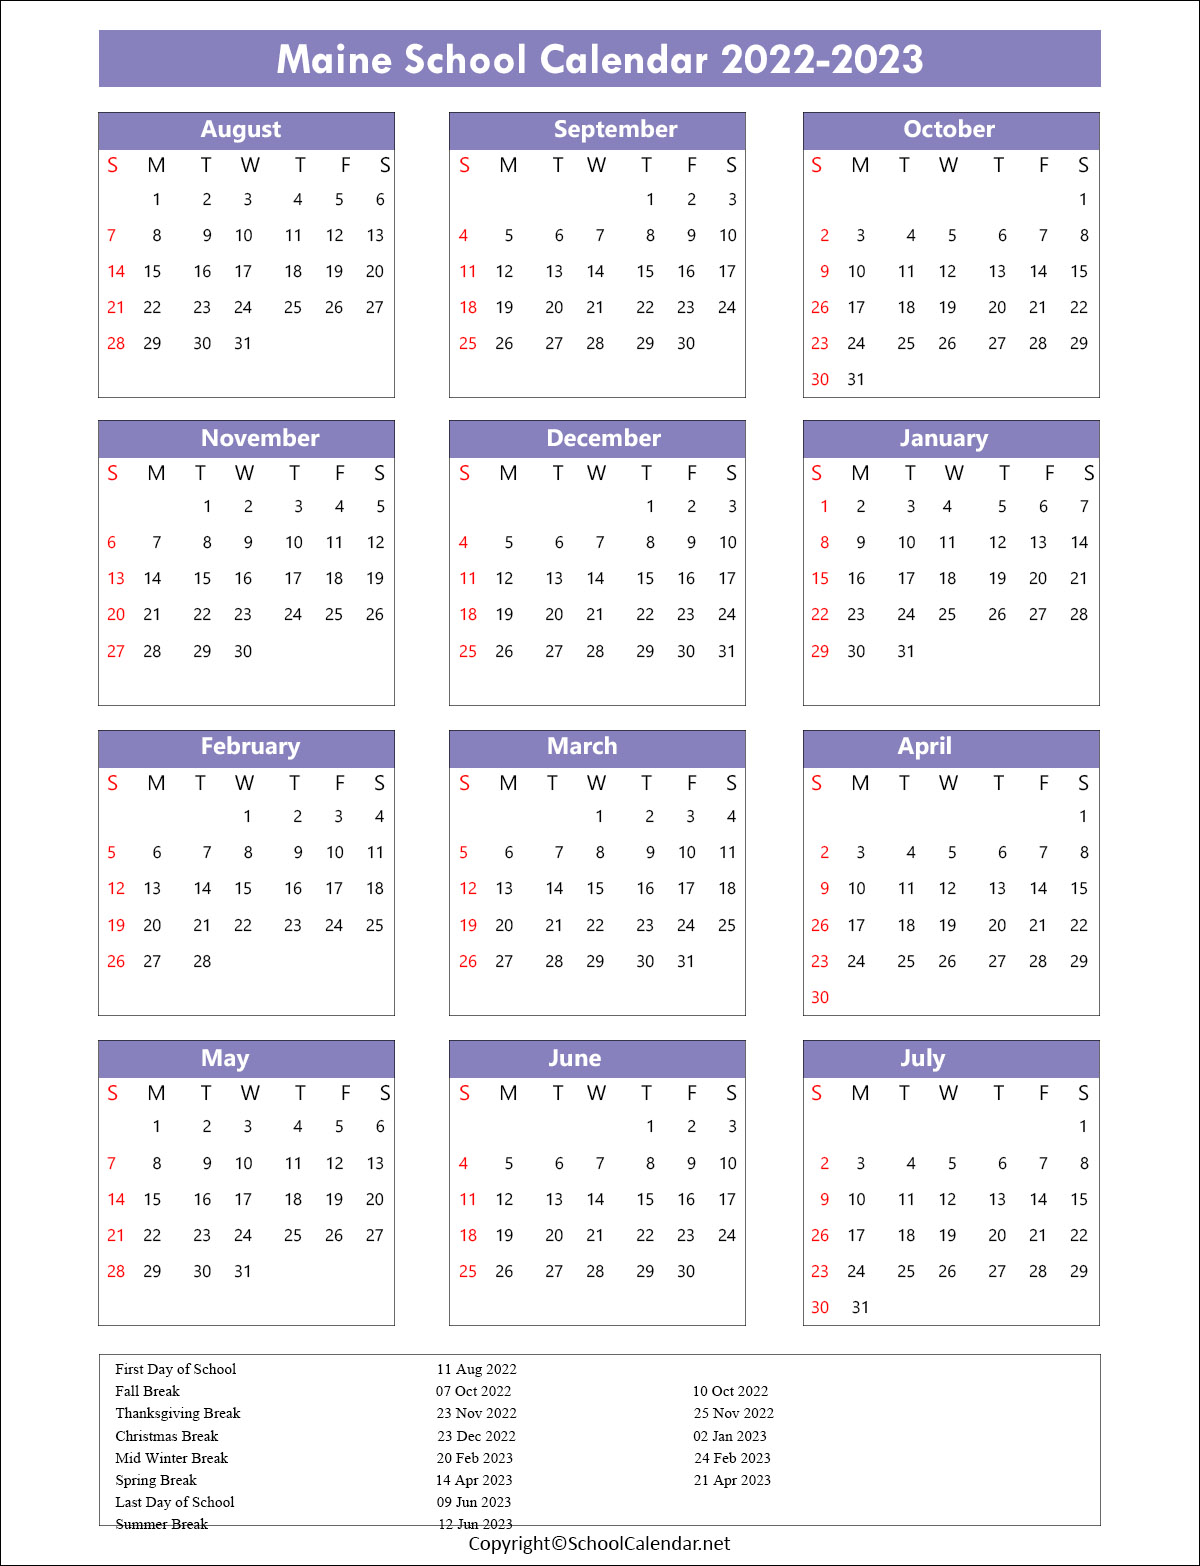 Maine School Calendar 2022